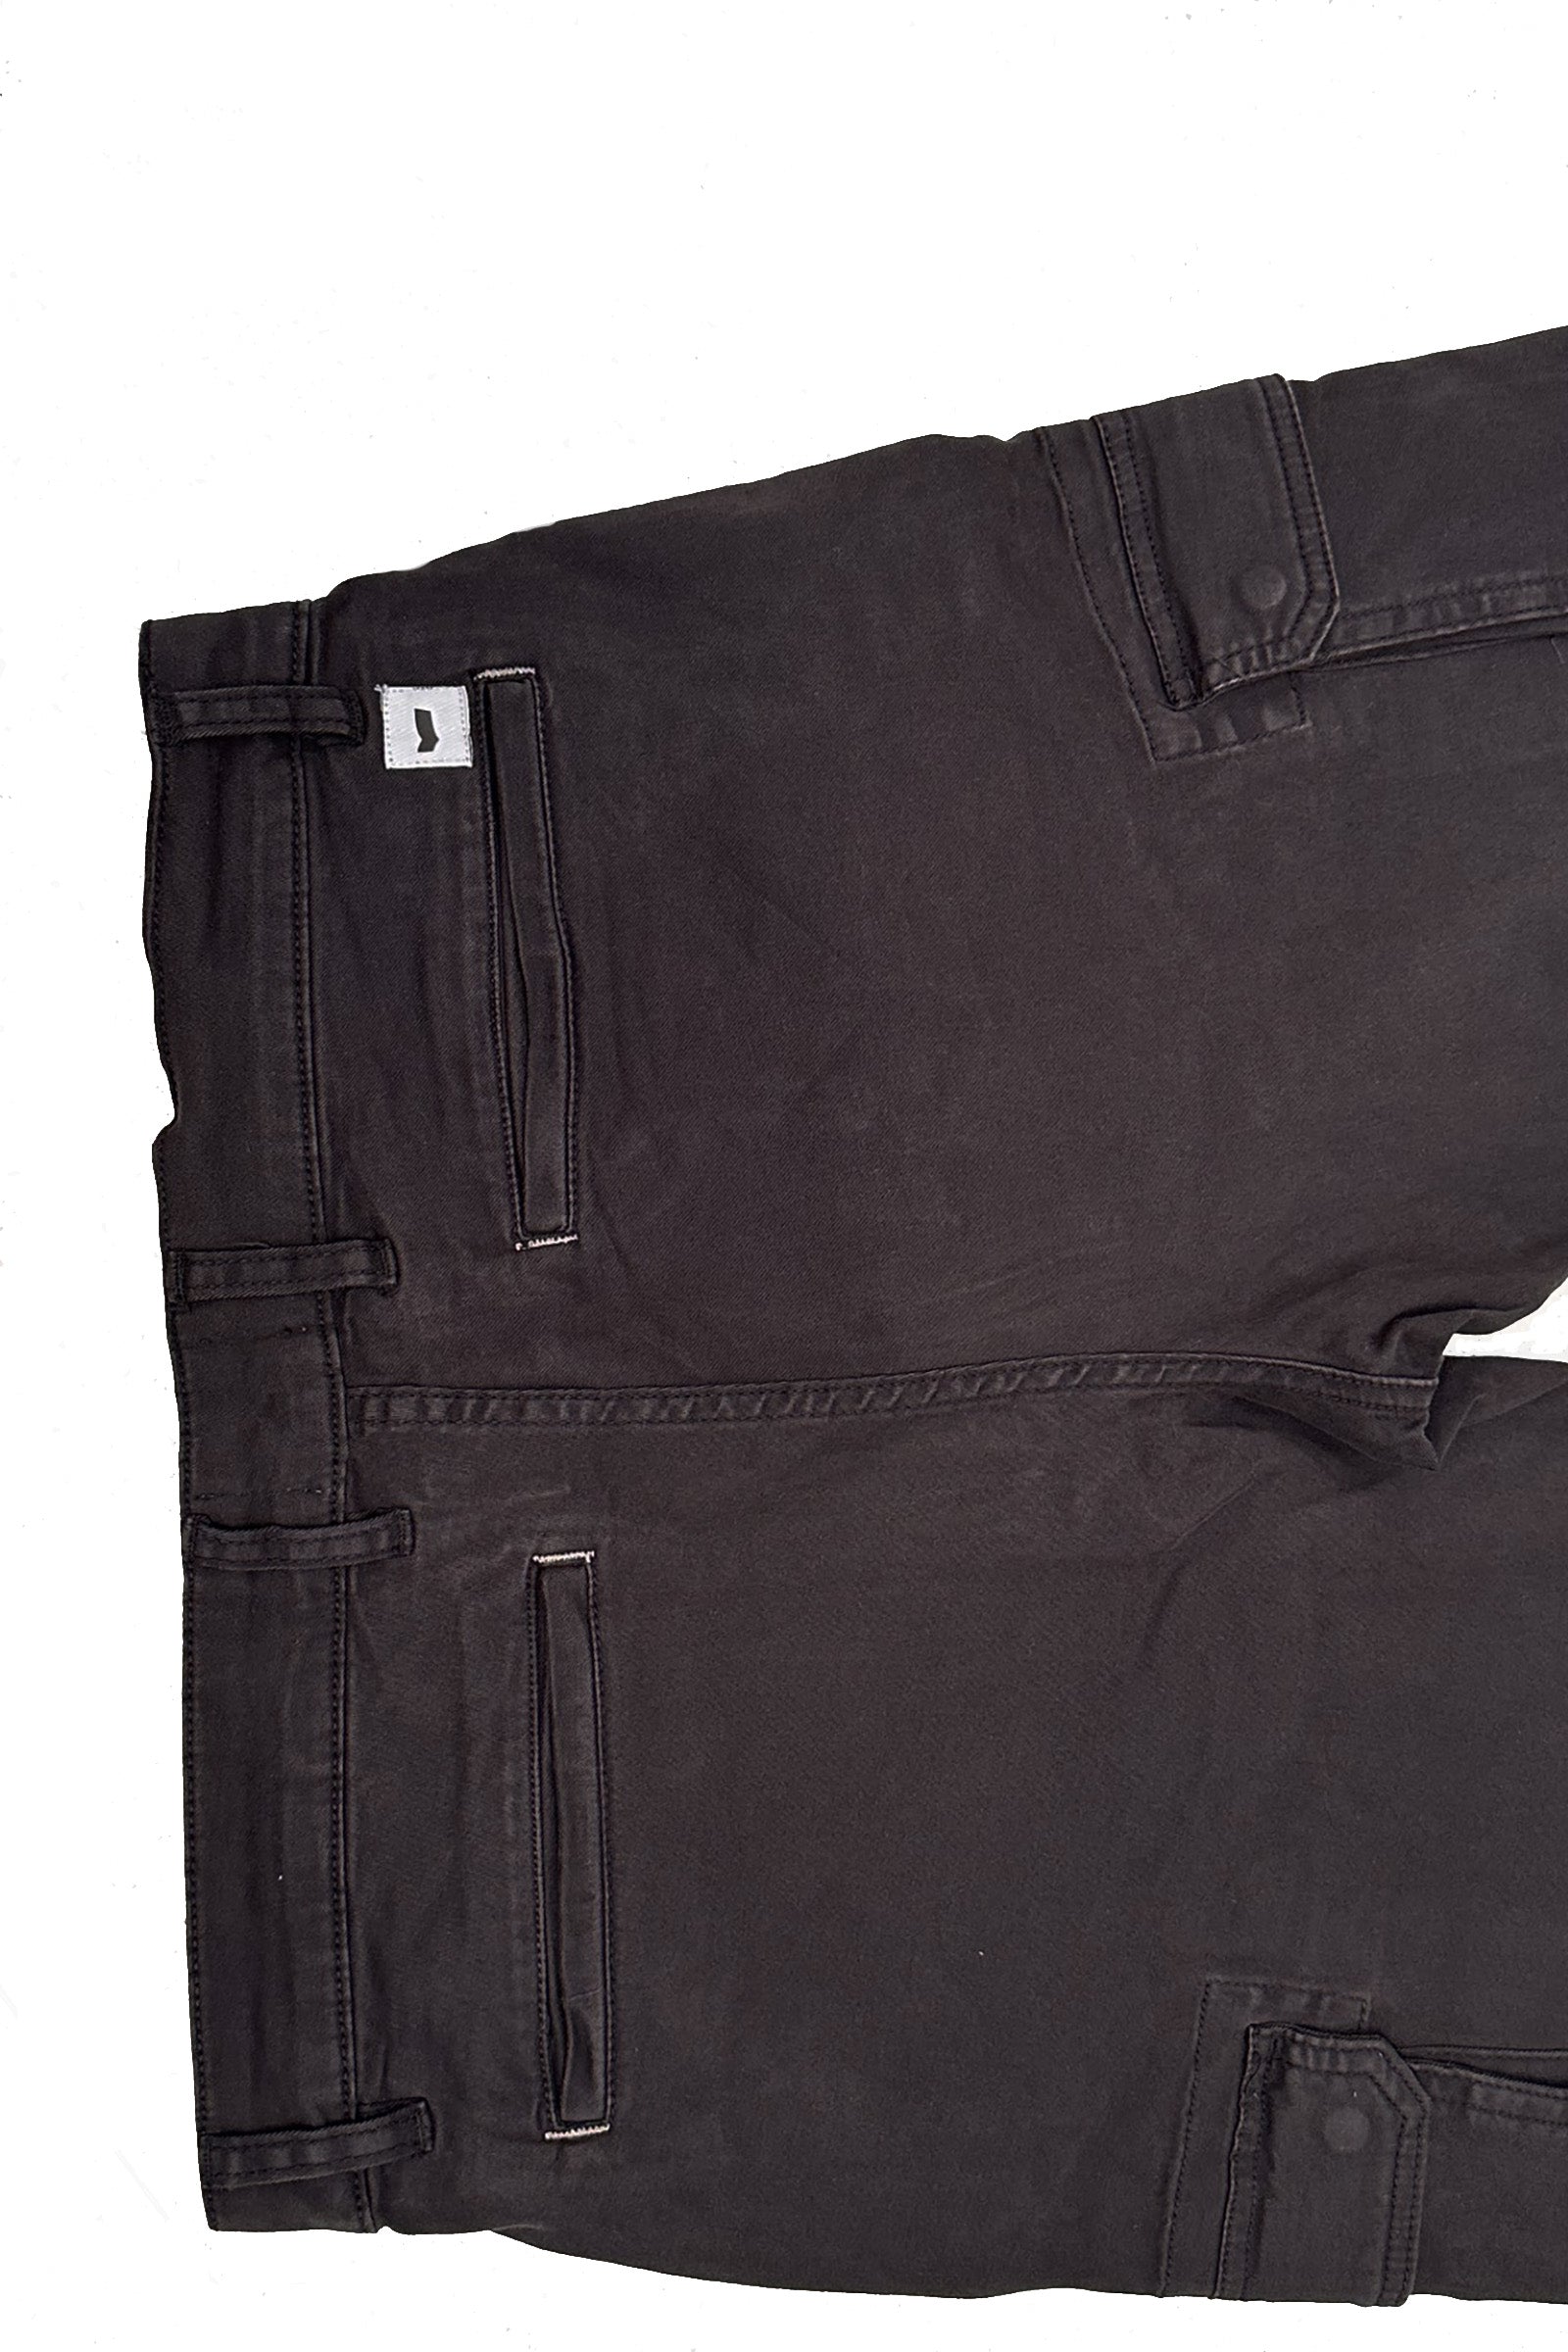 Bob Gym Pks Trousers in Black Hosen GAS   